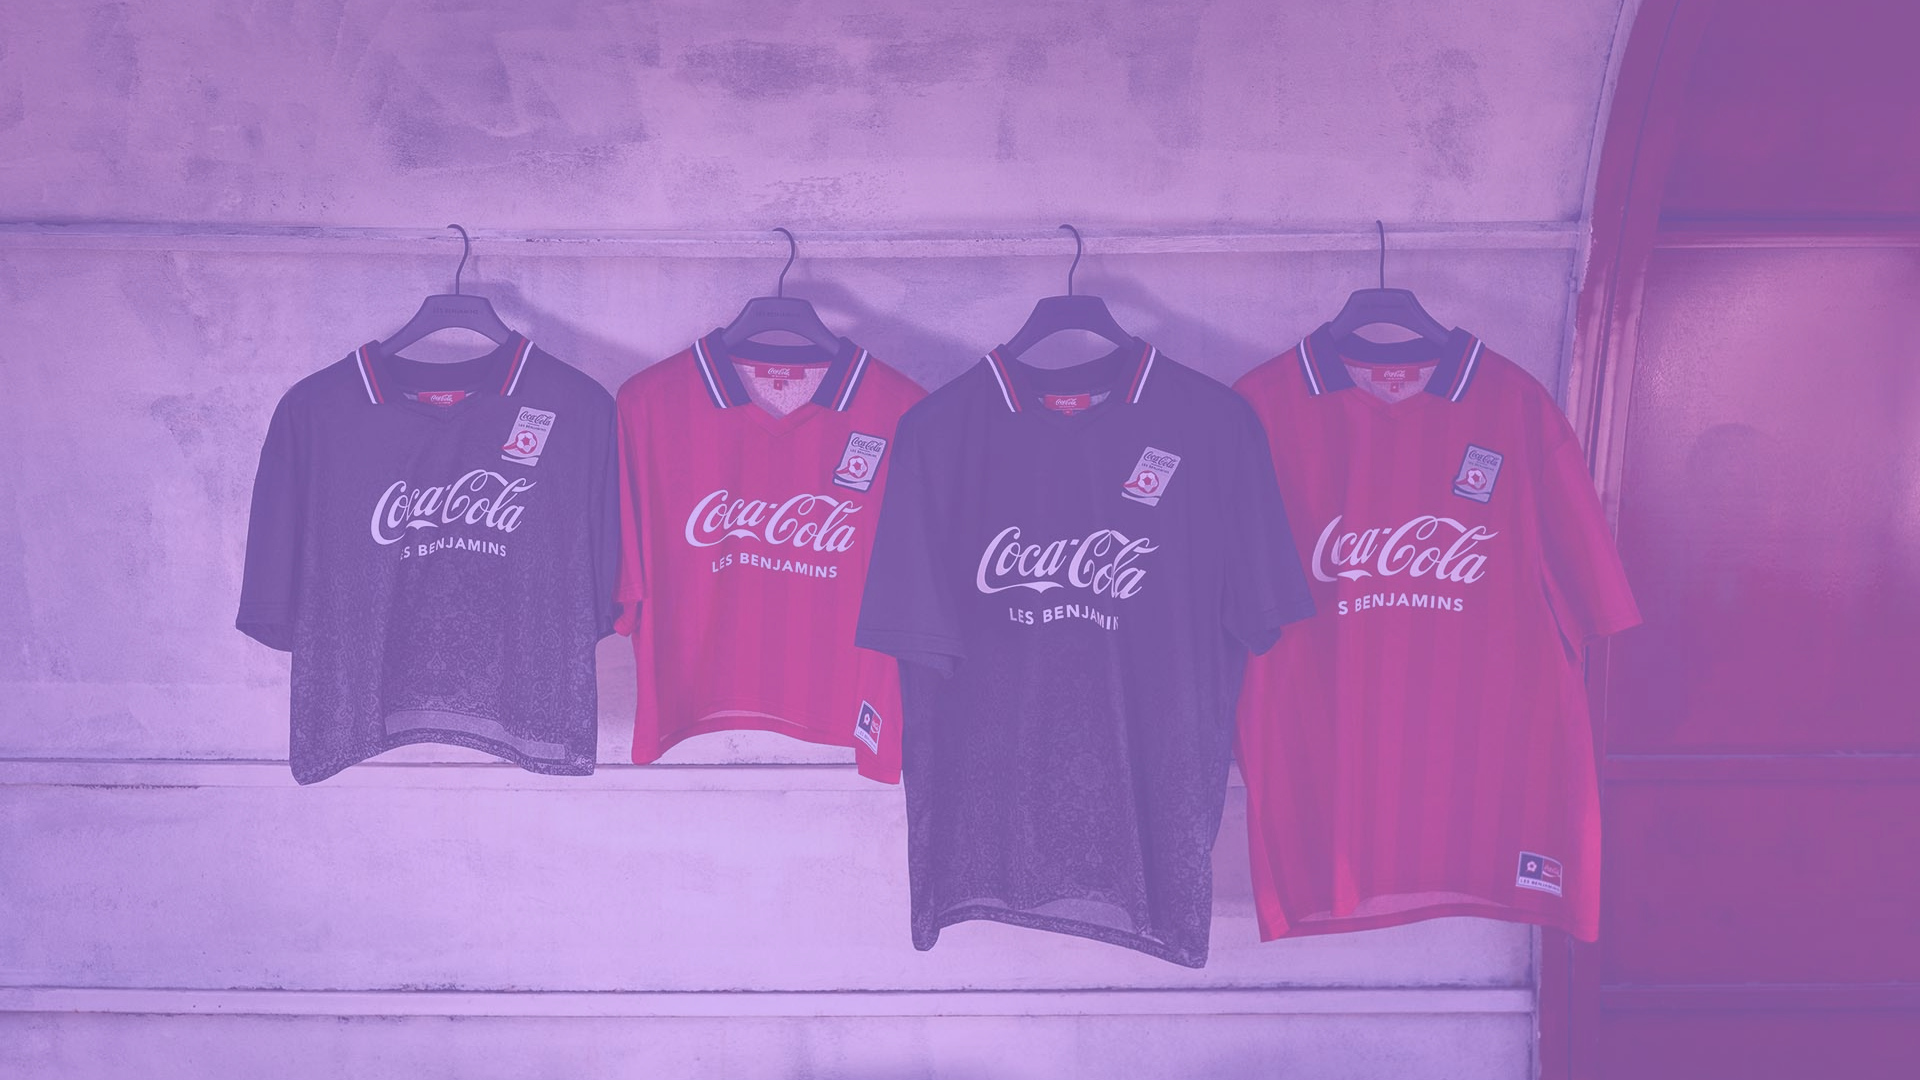 Les Benjamins reminded us of Coca Cola sponsors